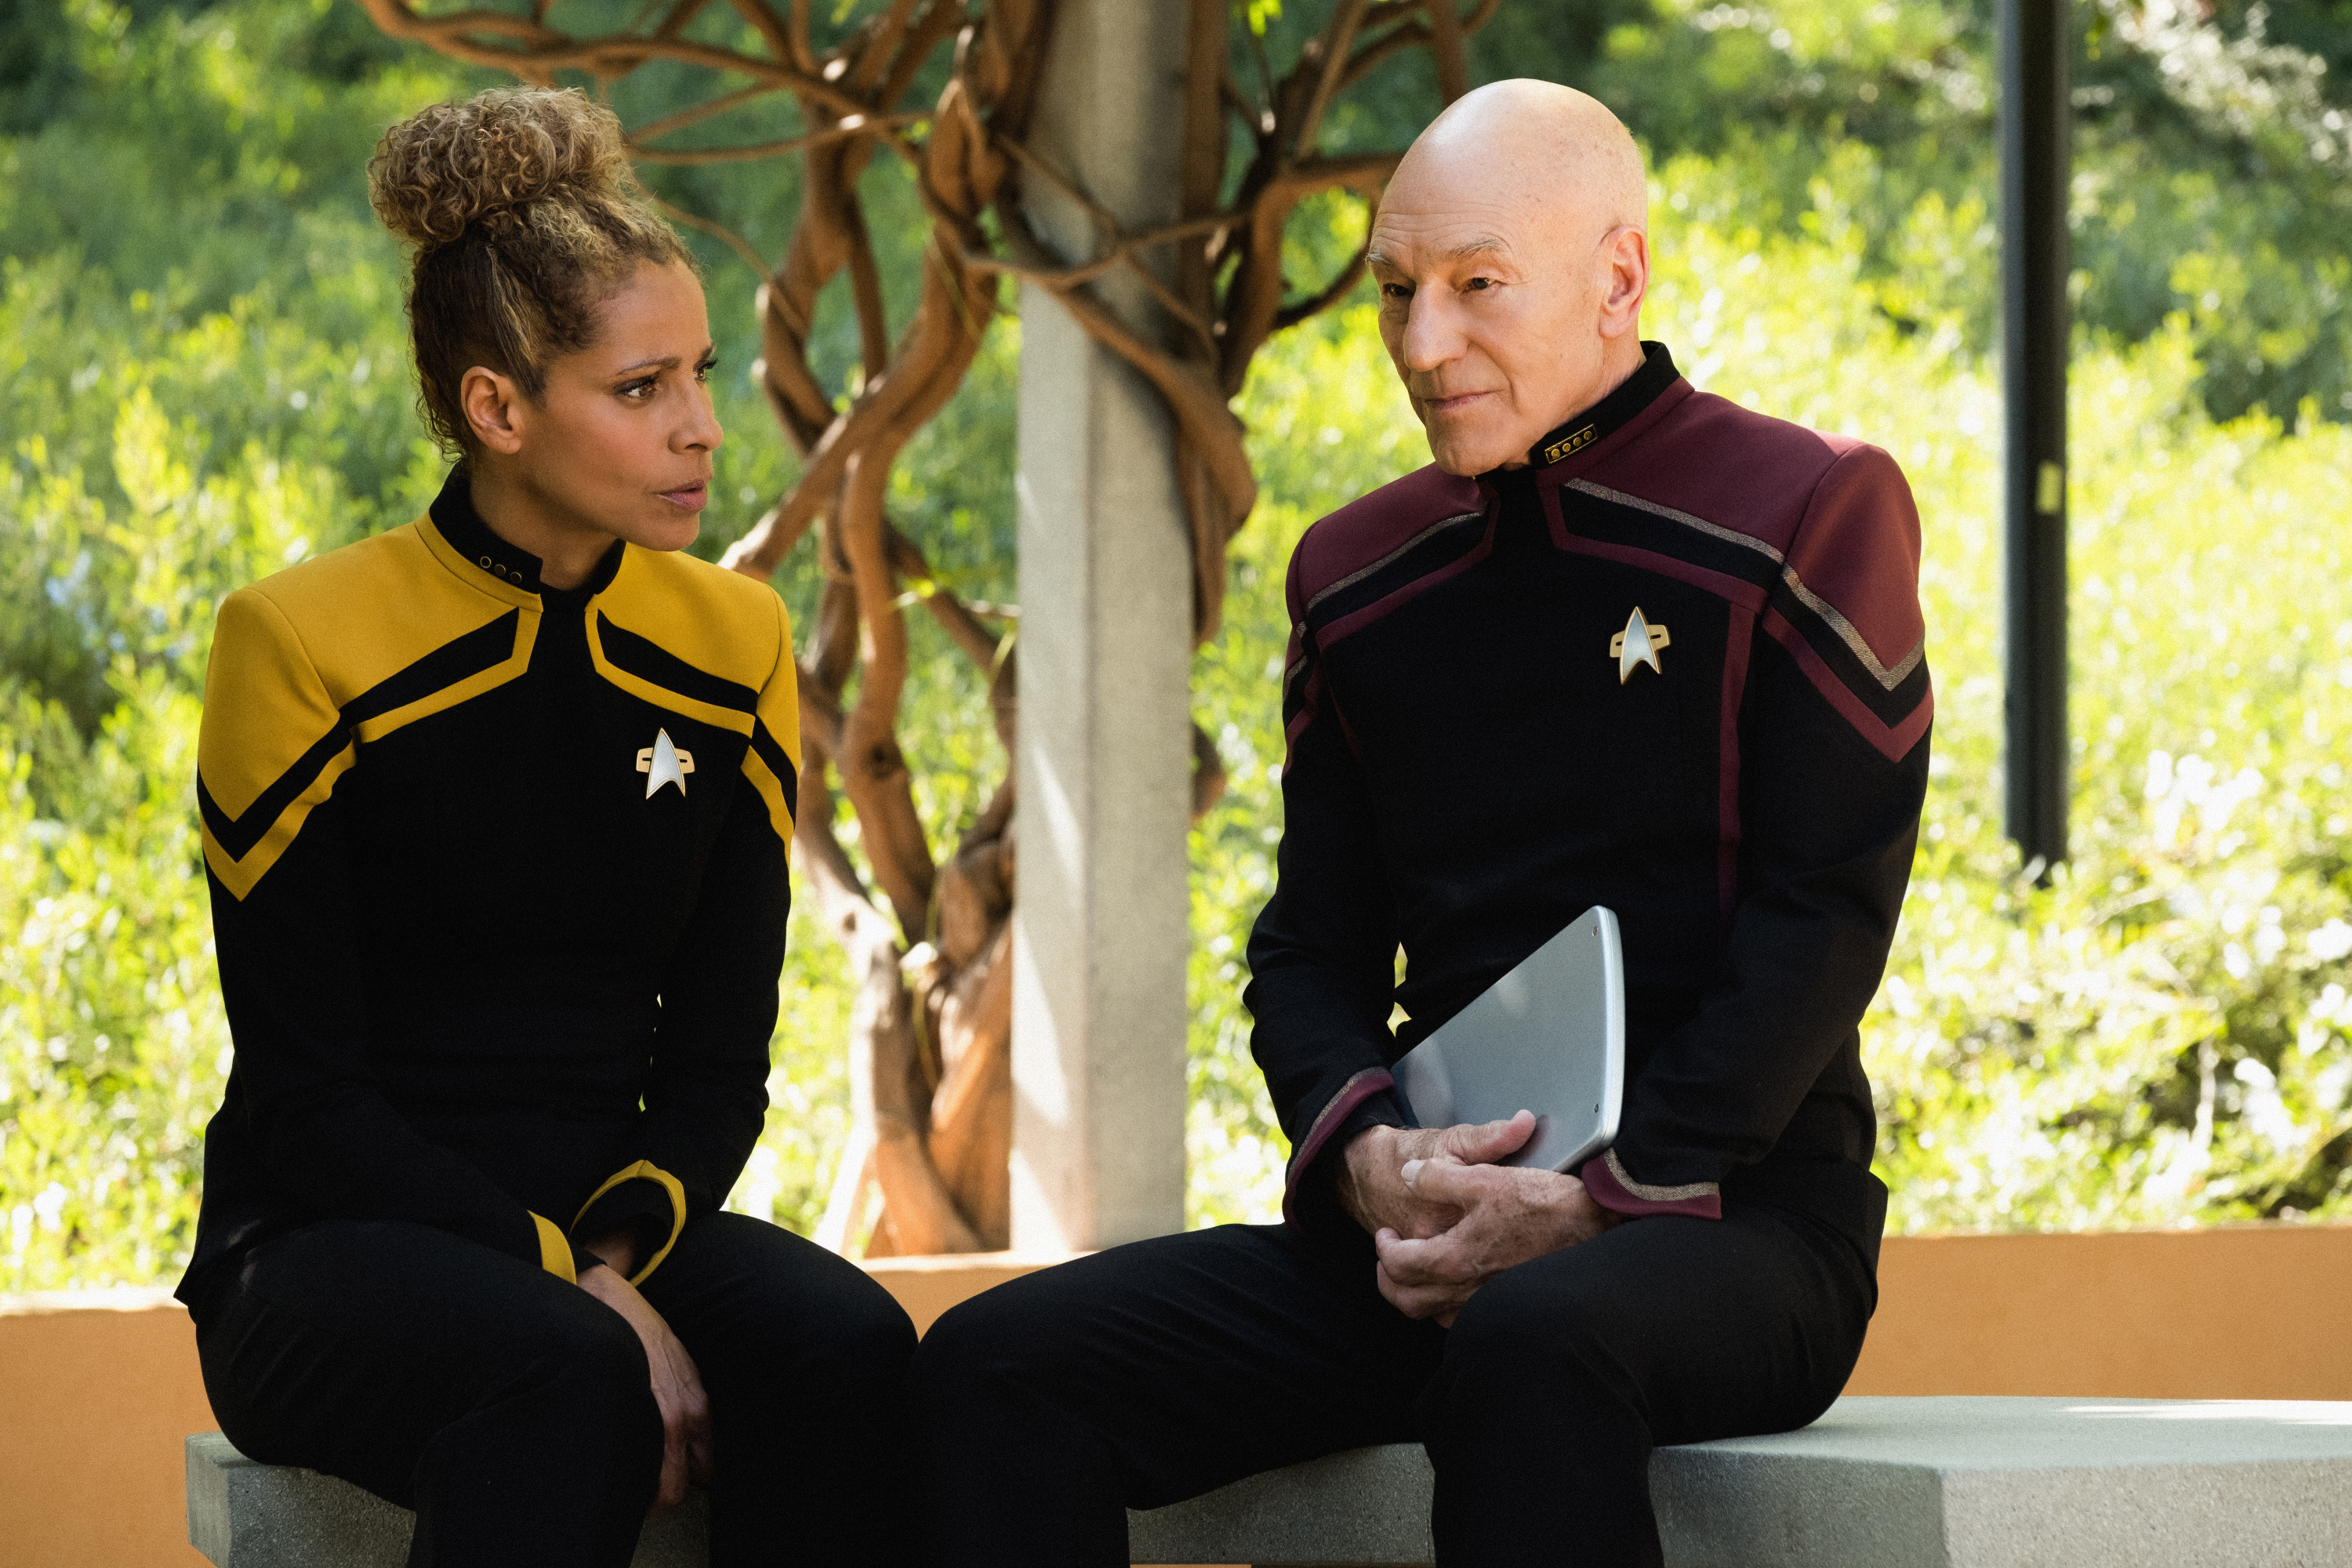 TV Show Star Trek: Picard HD Wallpaper | Background Image